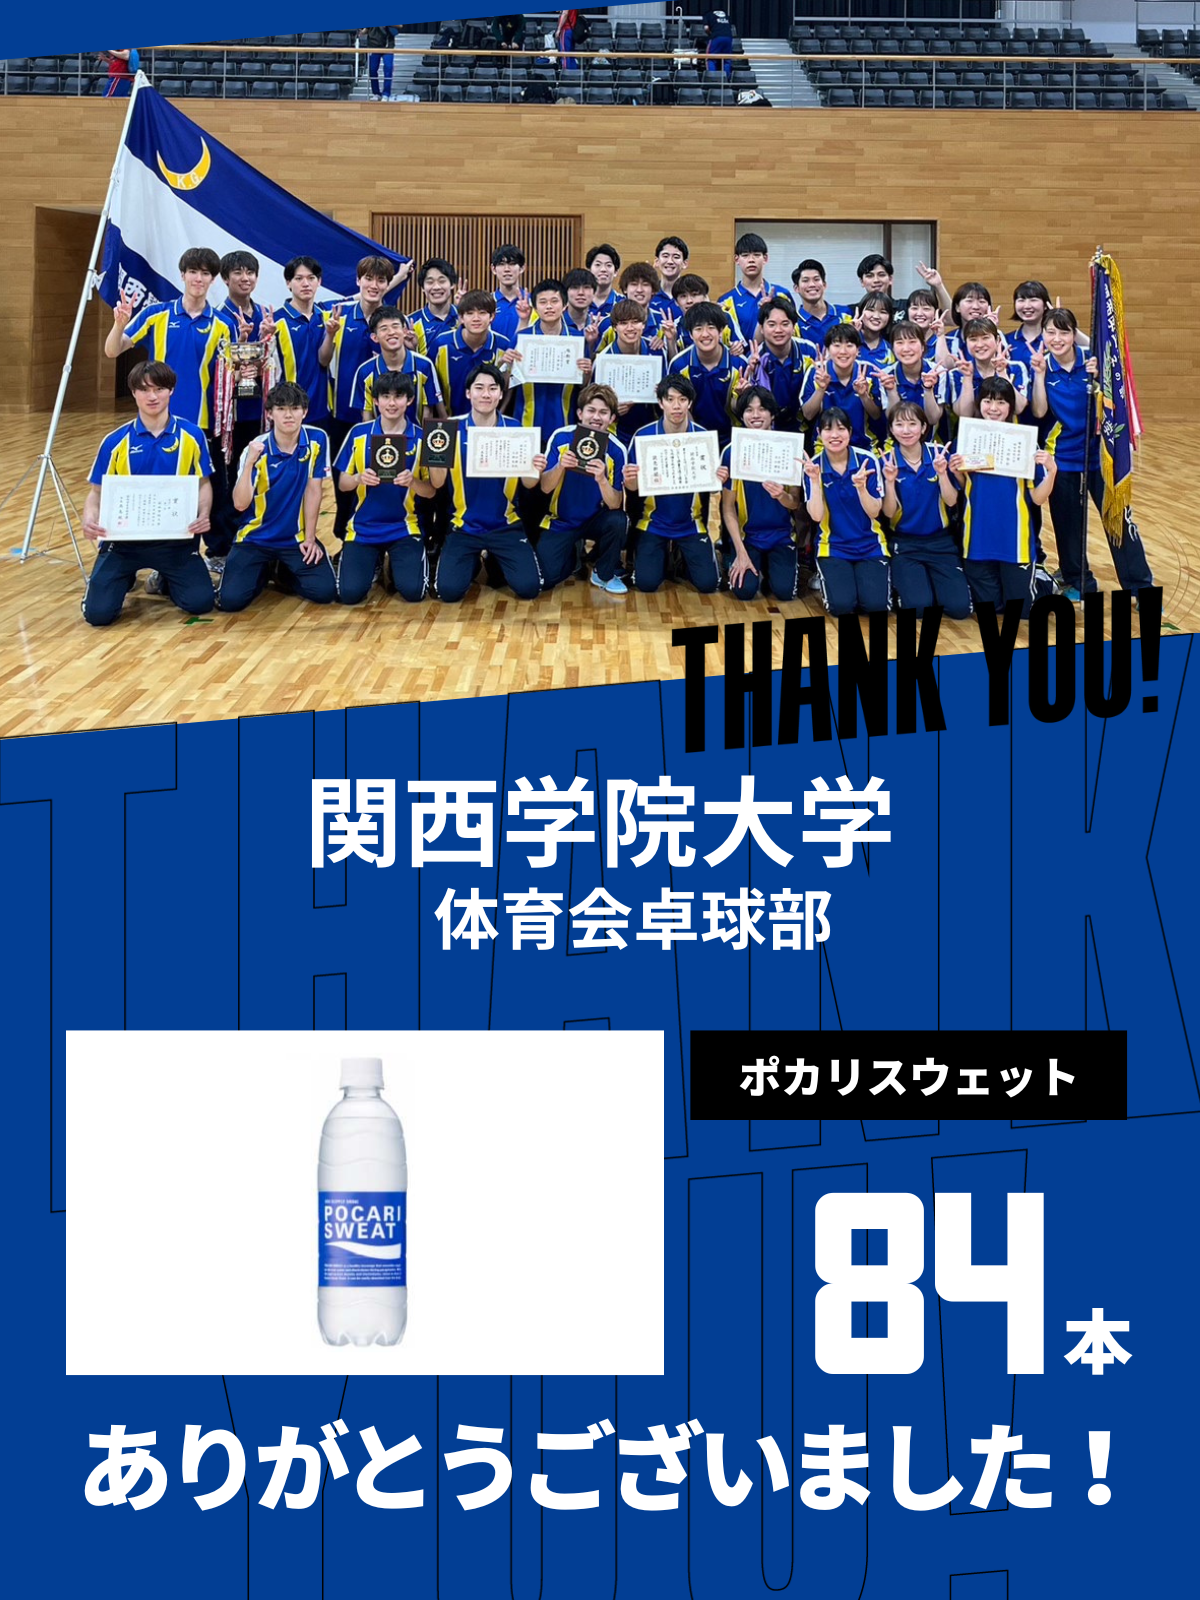 CHEER UP! for 関西学院大学　体育会卓球部